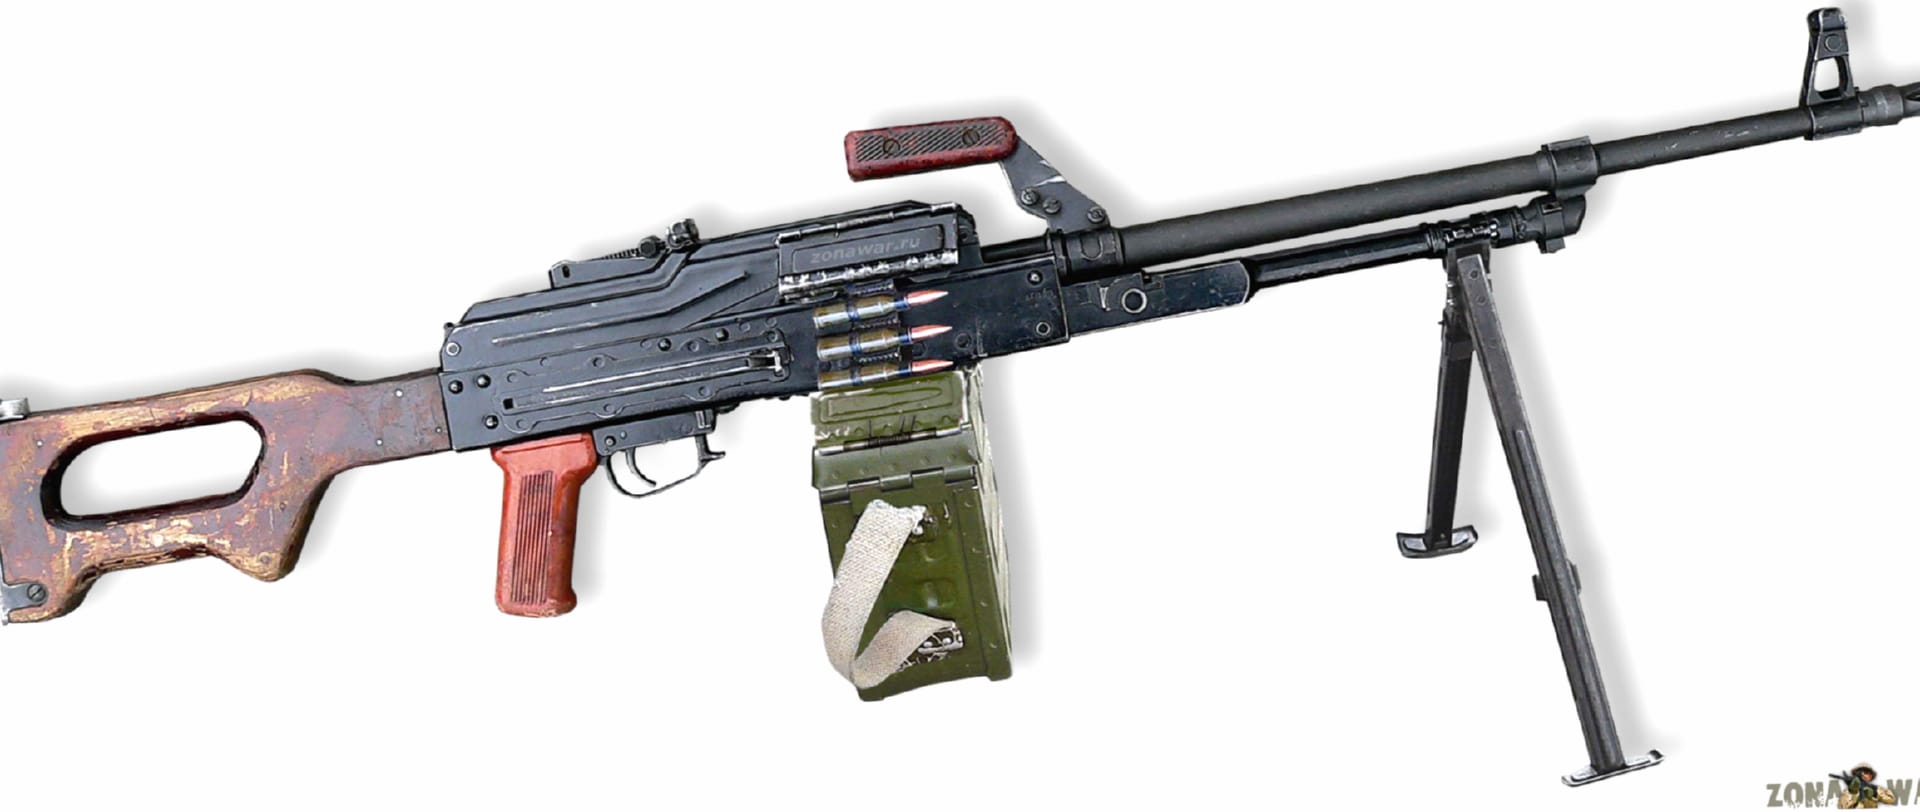 Kalashnikov Pk Rifle at 1280 x 960 size wallpapers HD quality